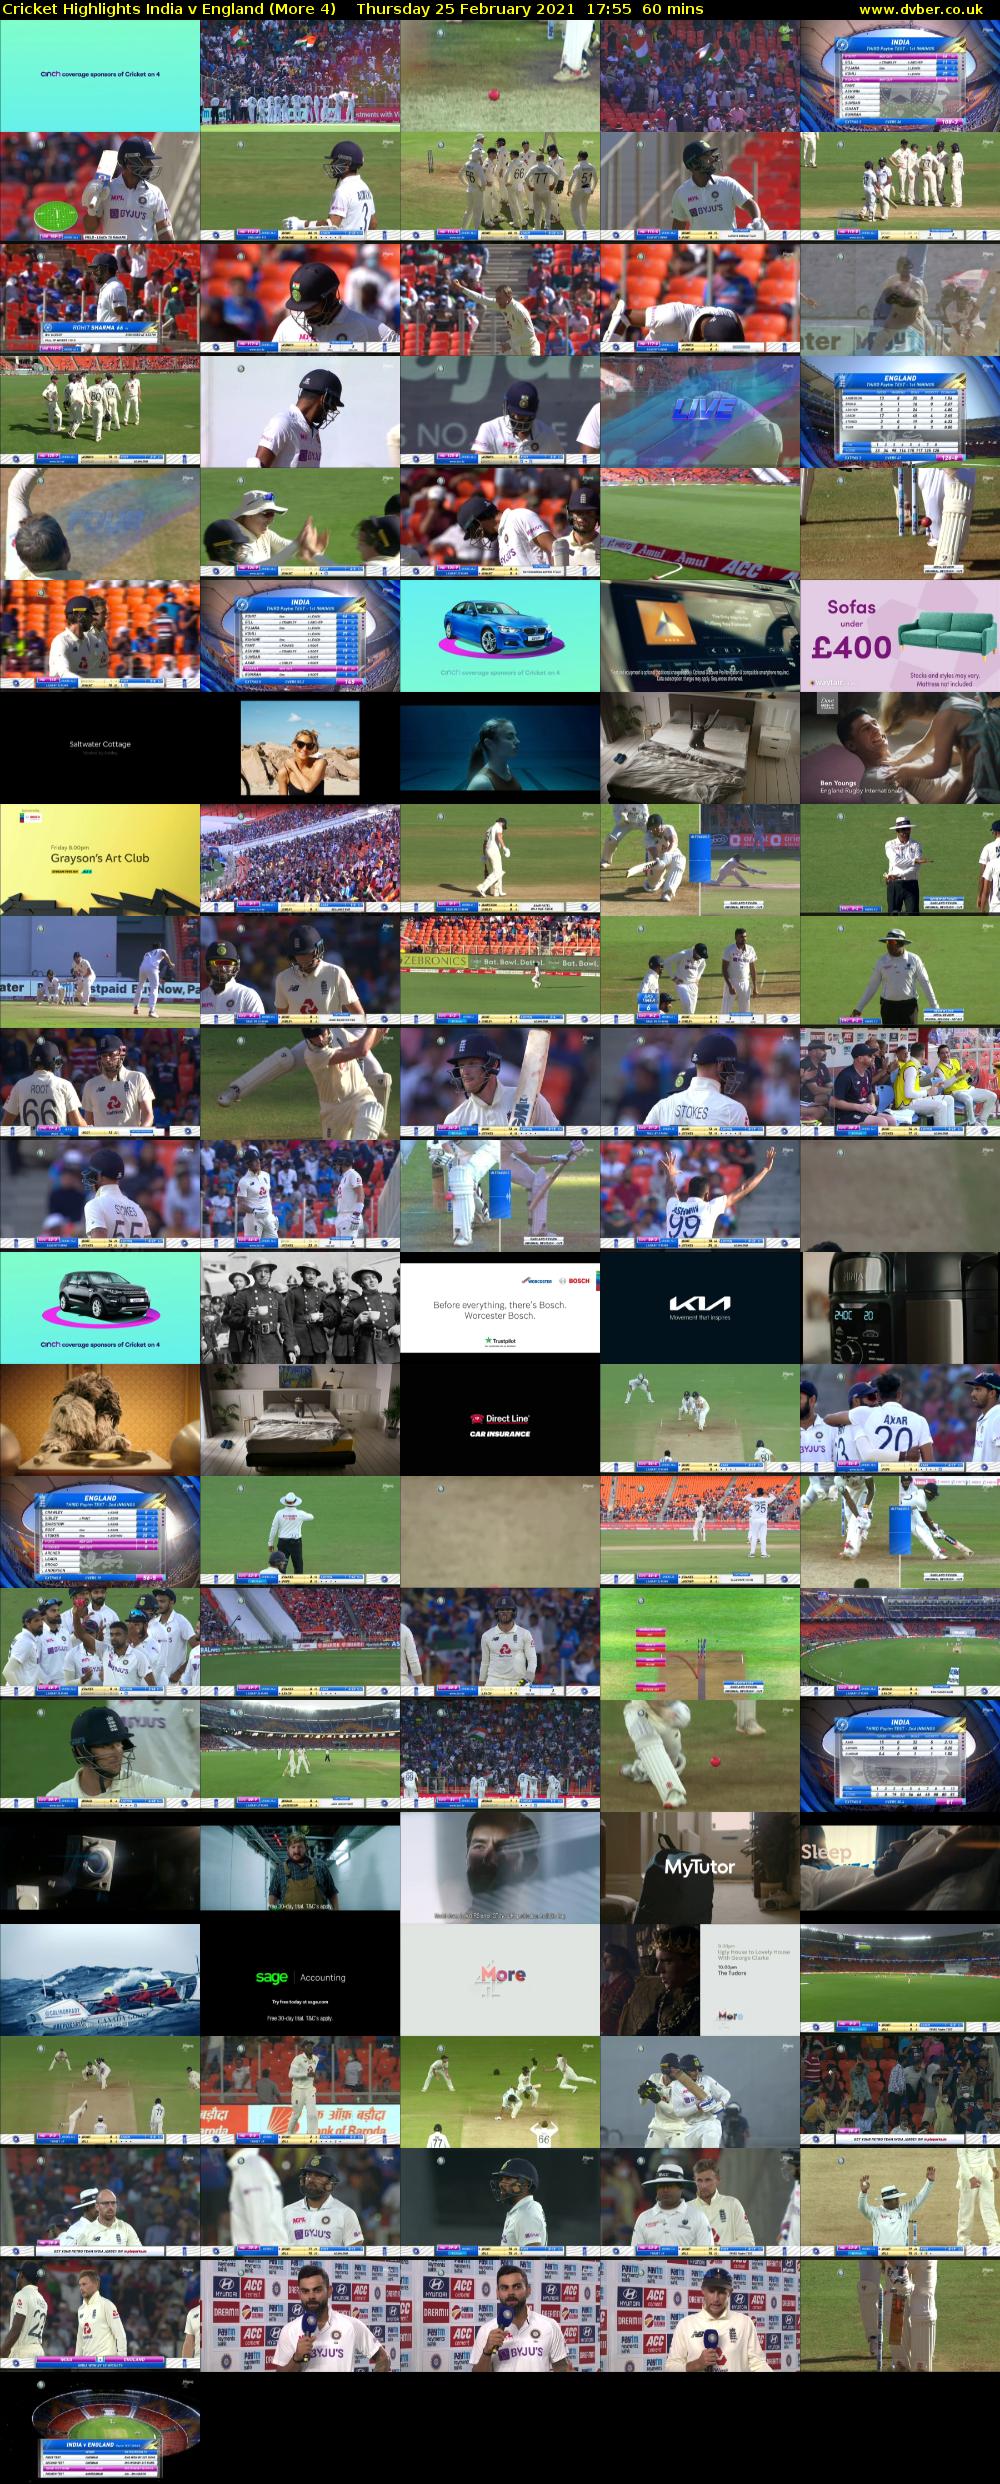 Cricket Highlights India v England (More 4) Thursday 25 February 2021 17:55 - 18:55